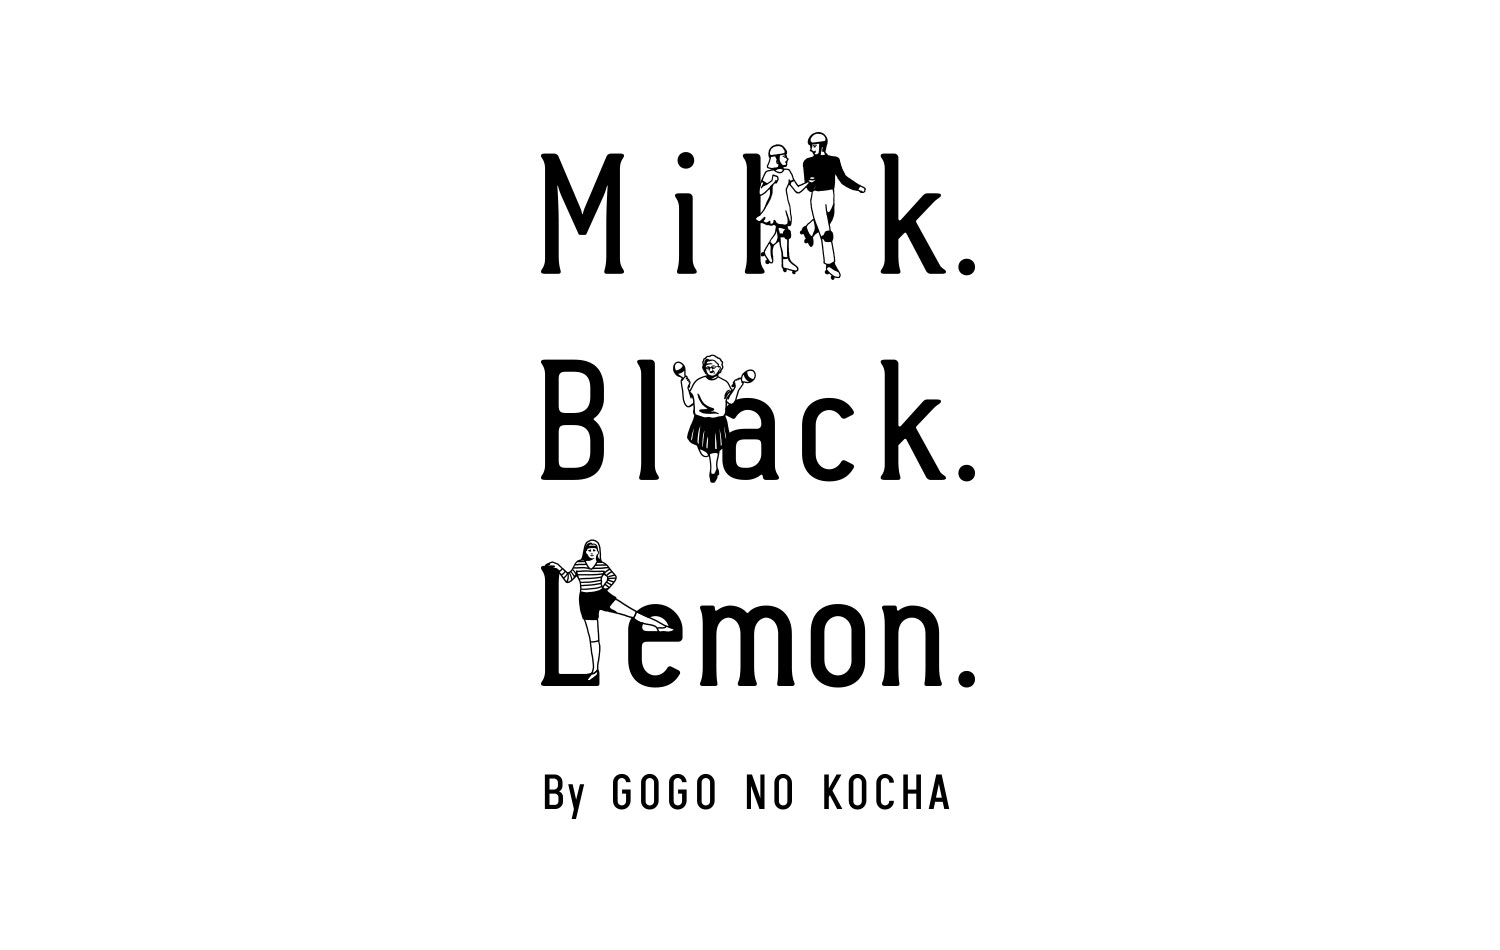 Milk. Black. Lemon.